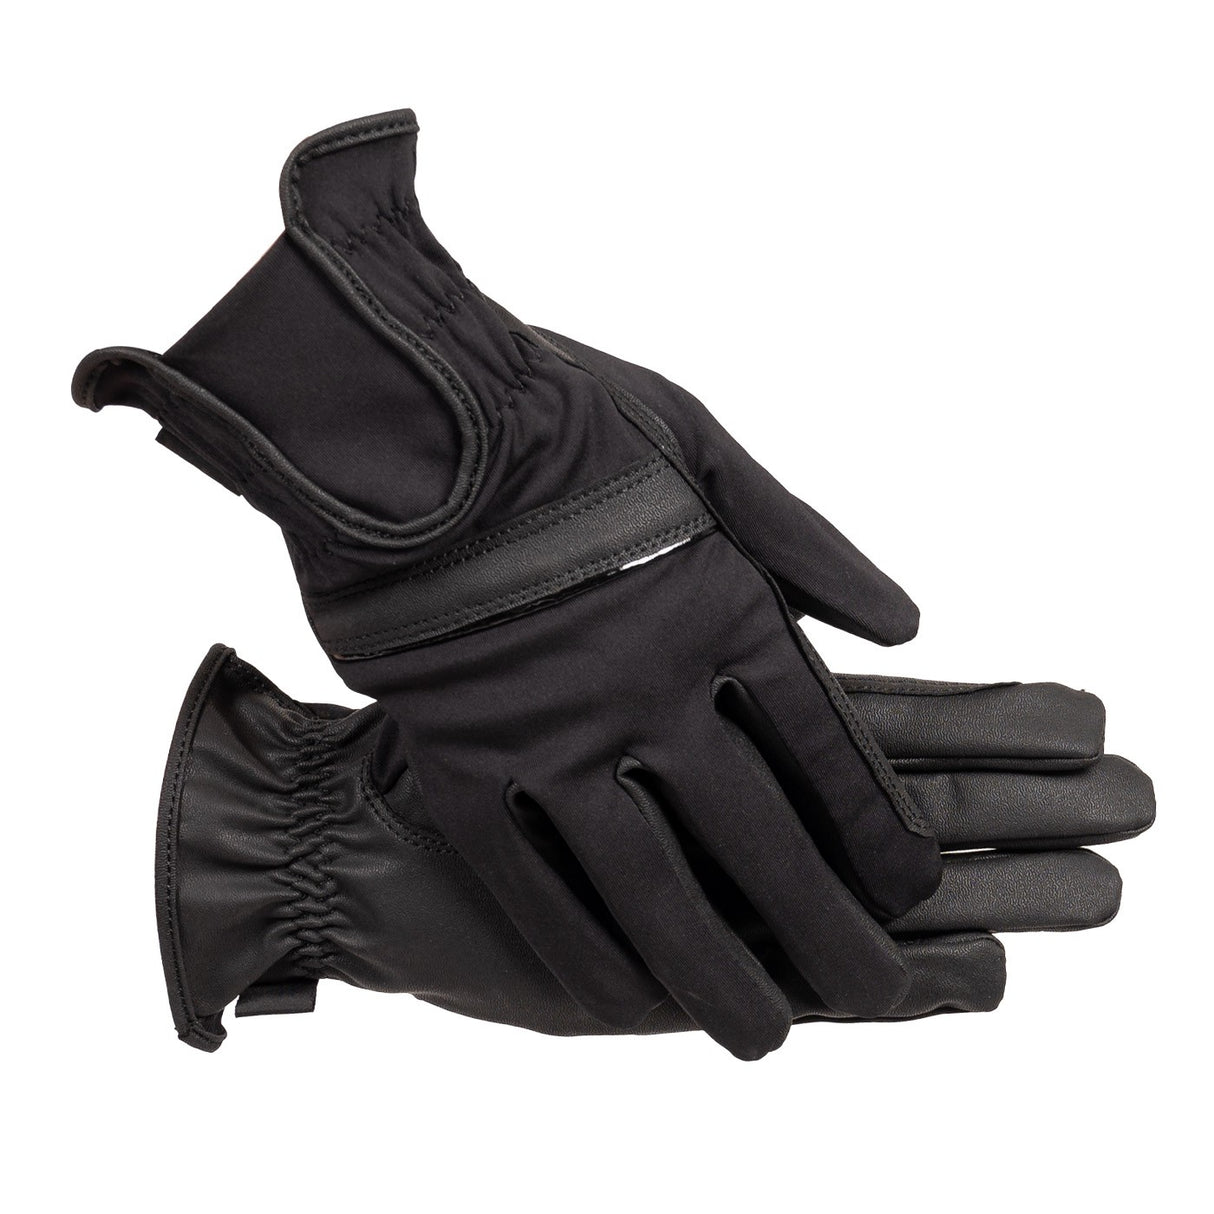 Konekt Caldwell Gloves - Men's